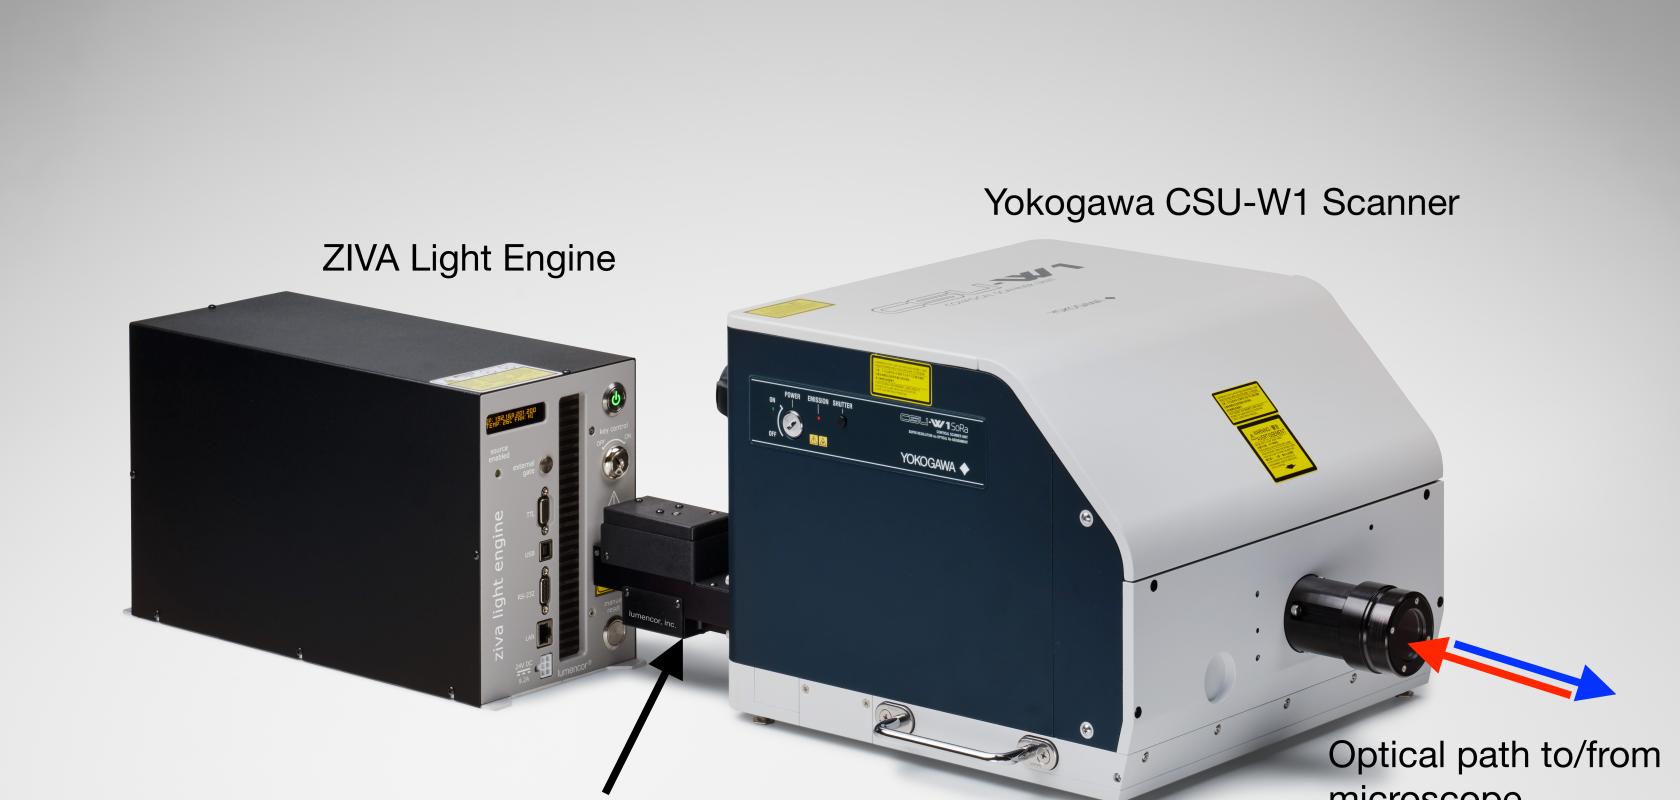 Figure 2: Layout of the ZIVA Light Engine coupled to the Yokogawa CSU confocal scanner